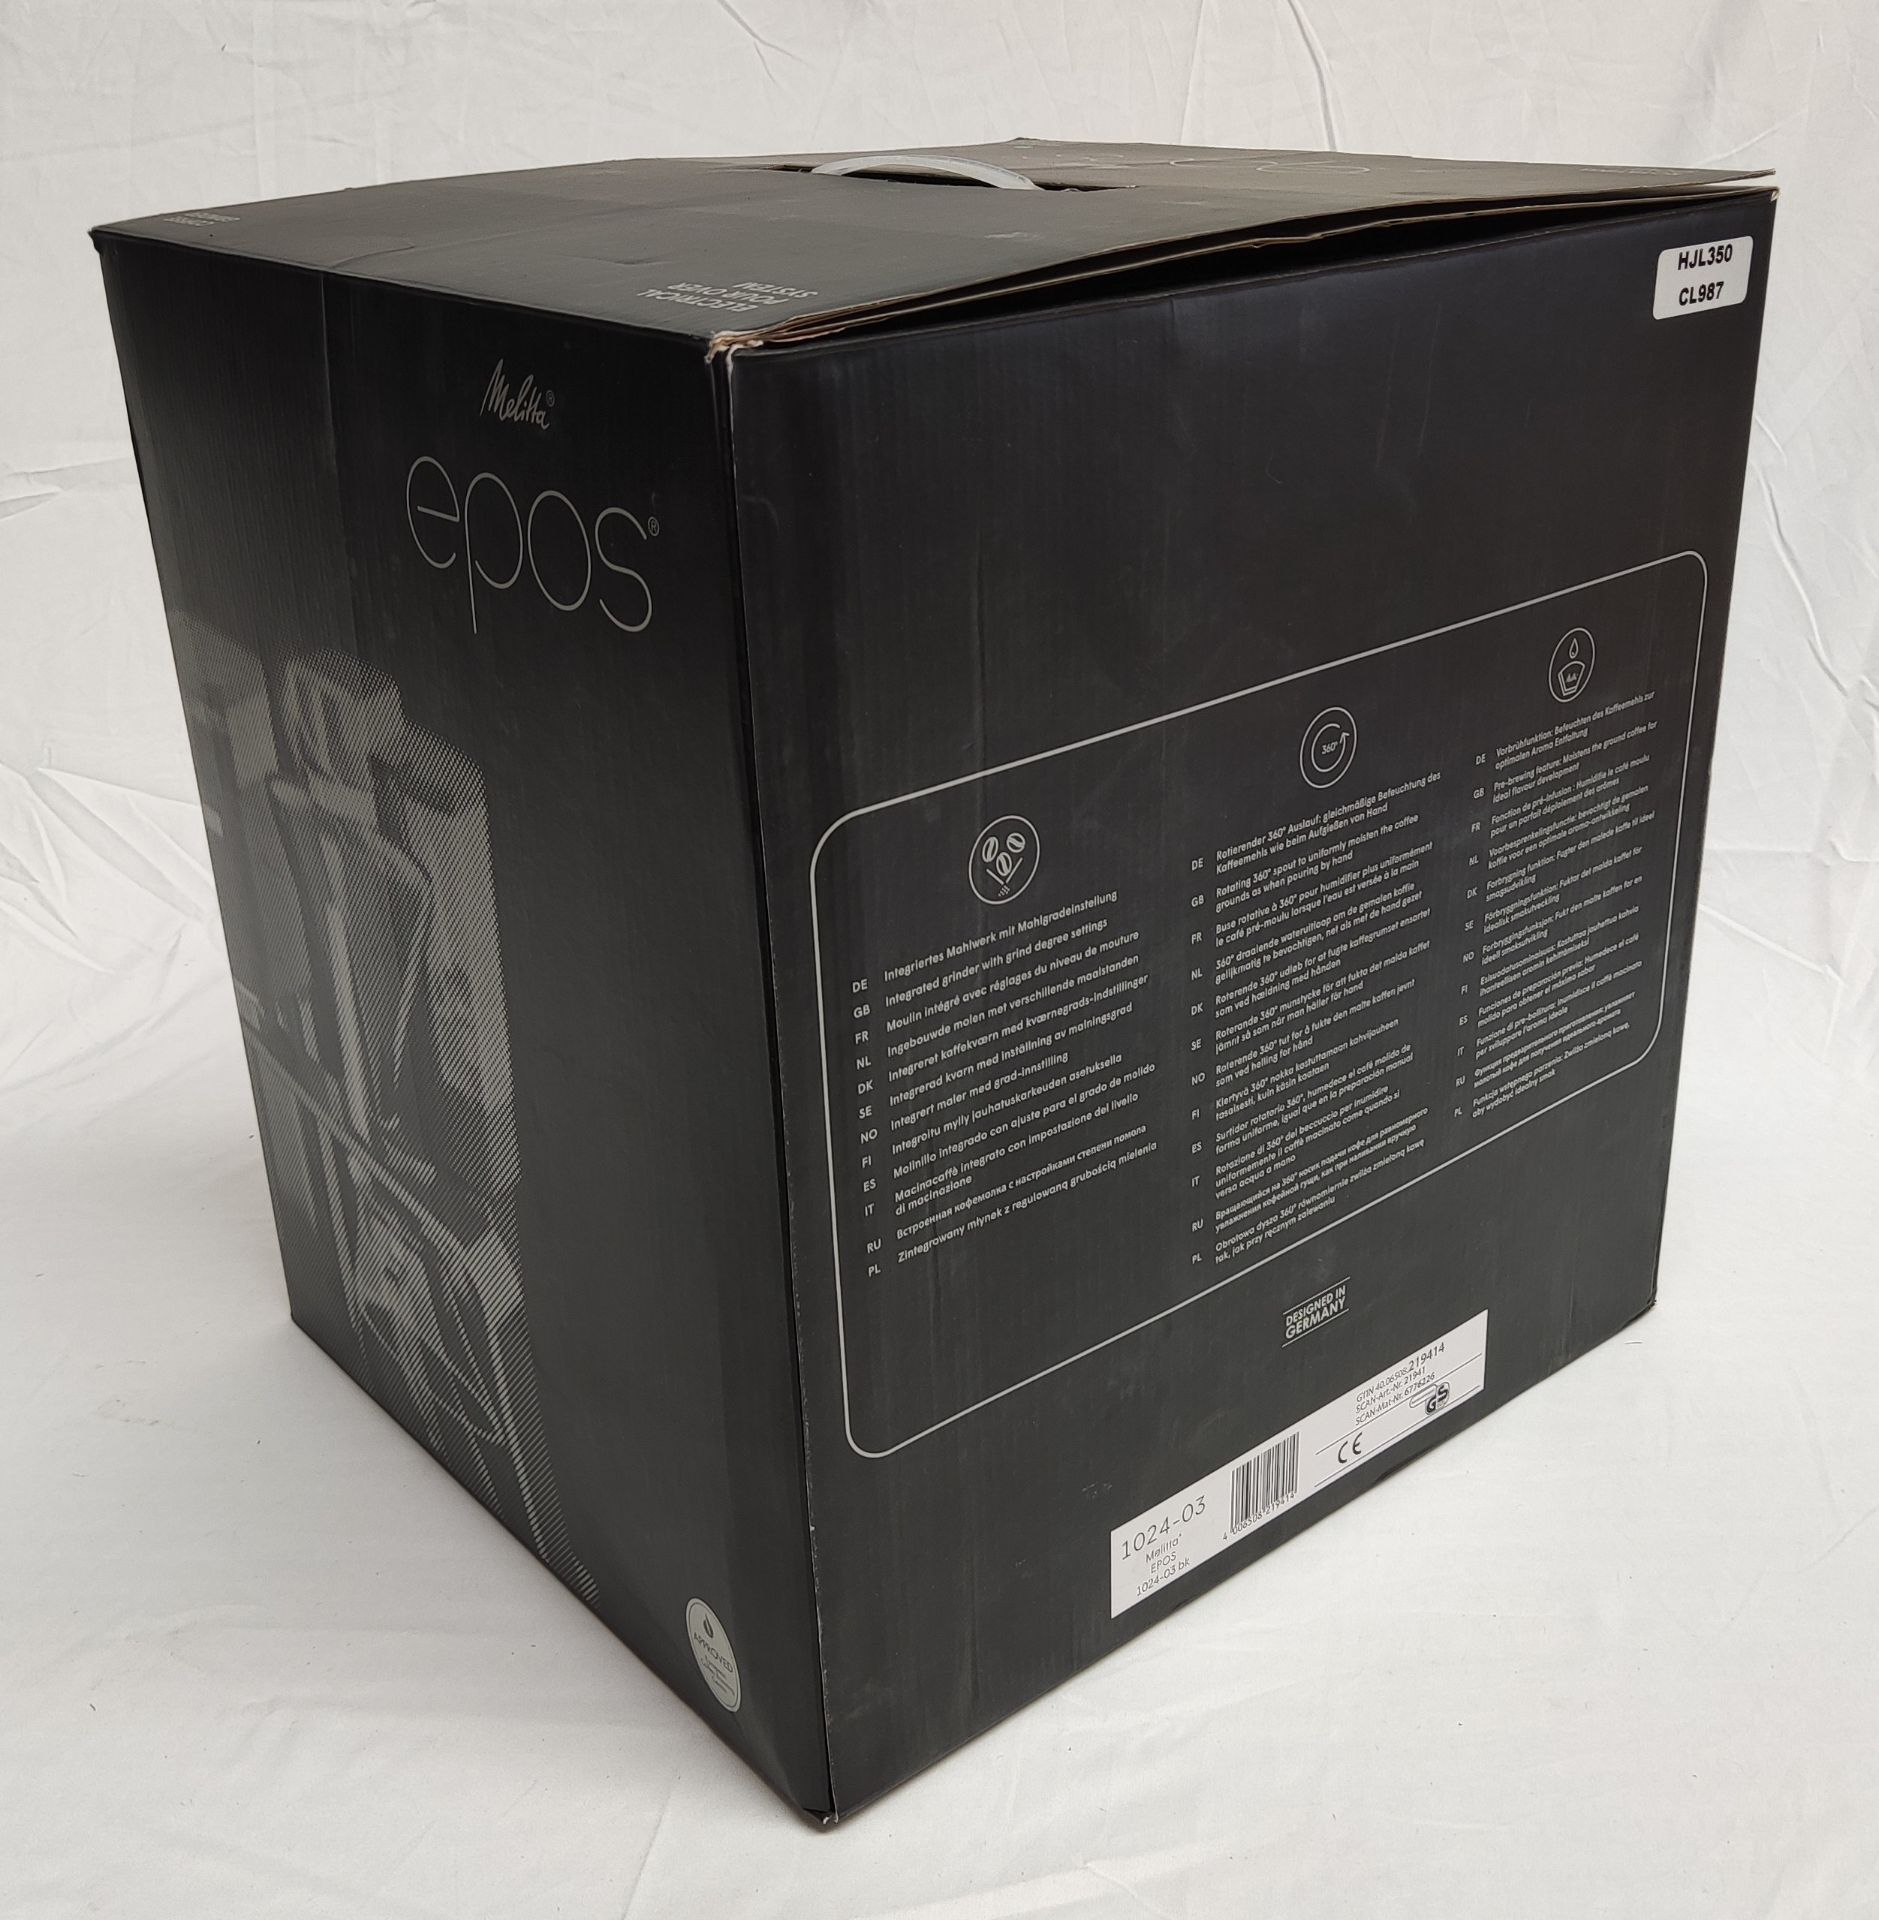 1 x MELITTA Epos Coffee Machine With Grinder - Boxed - Original RRP £399 - Ref: 7129012/HJL350/C19/ - Image 13 of 14